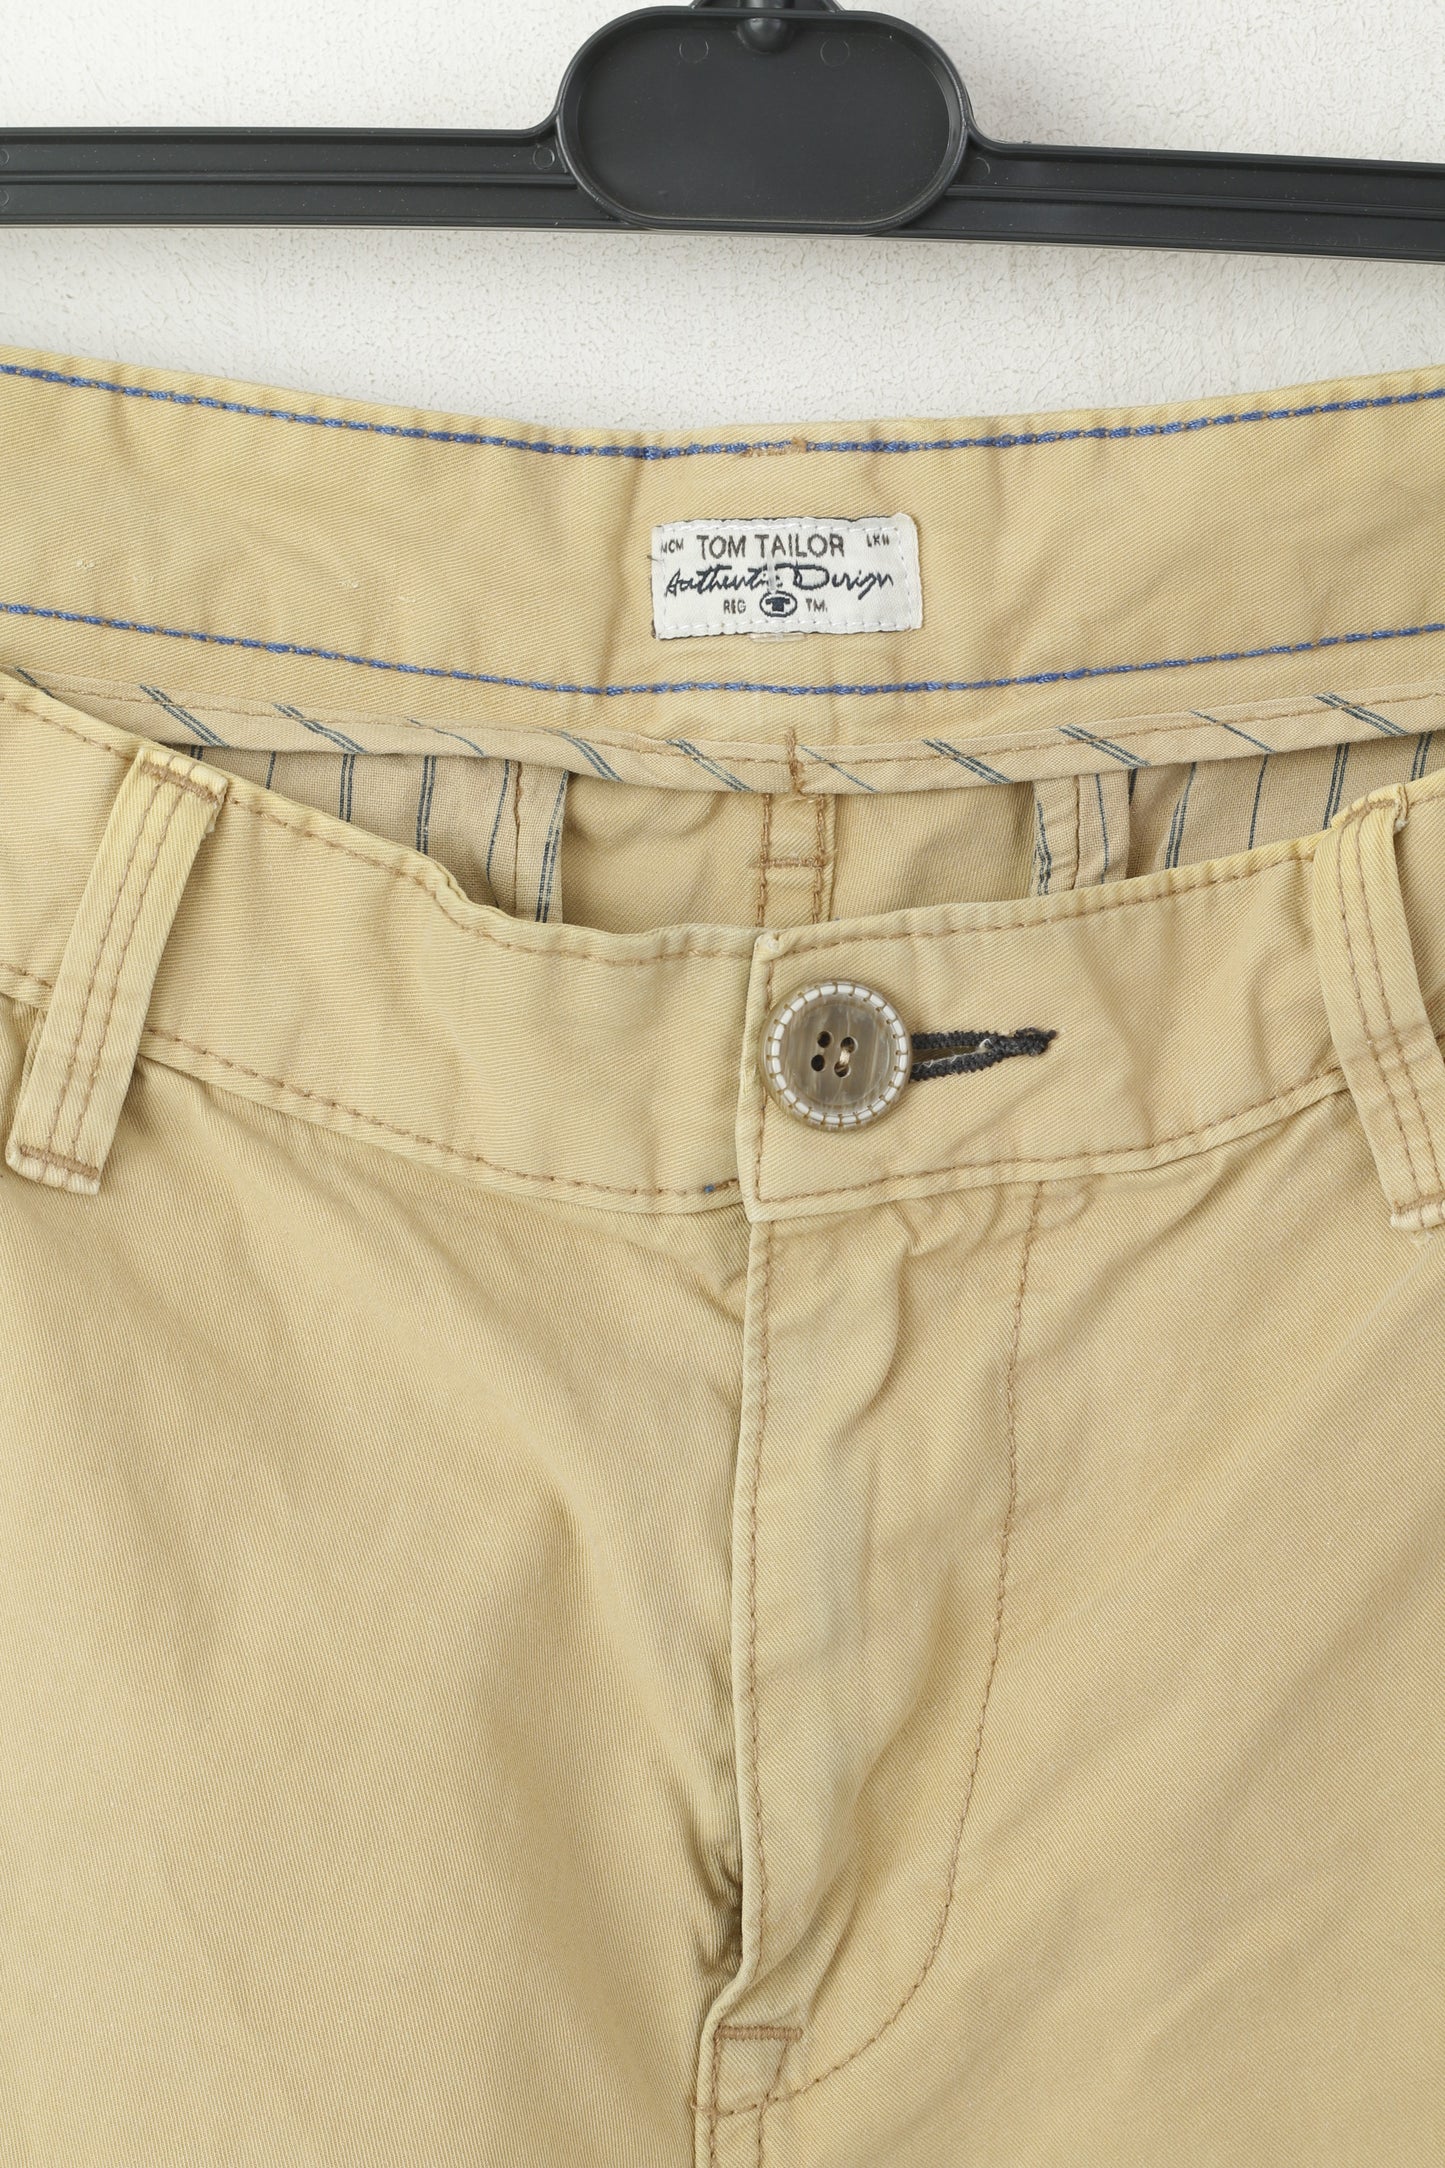 Tom Tailor Men 34 Trousers Cream Cotton Marvin Slim Casual Pants